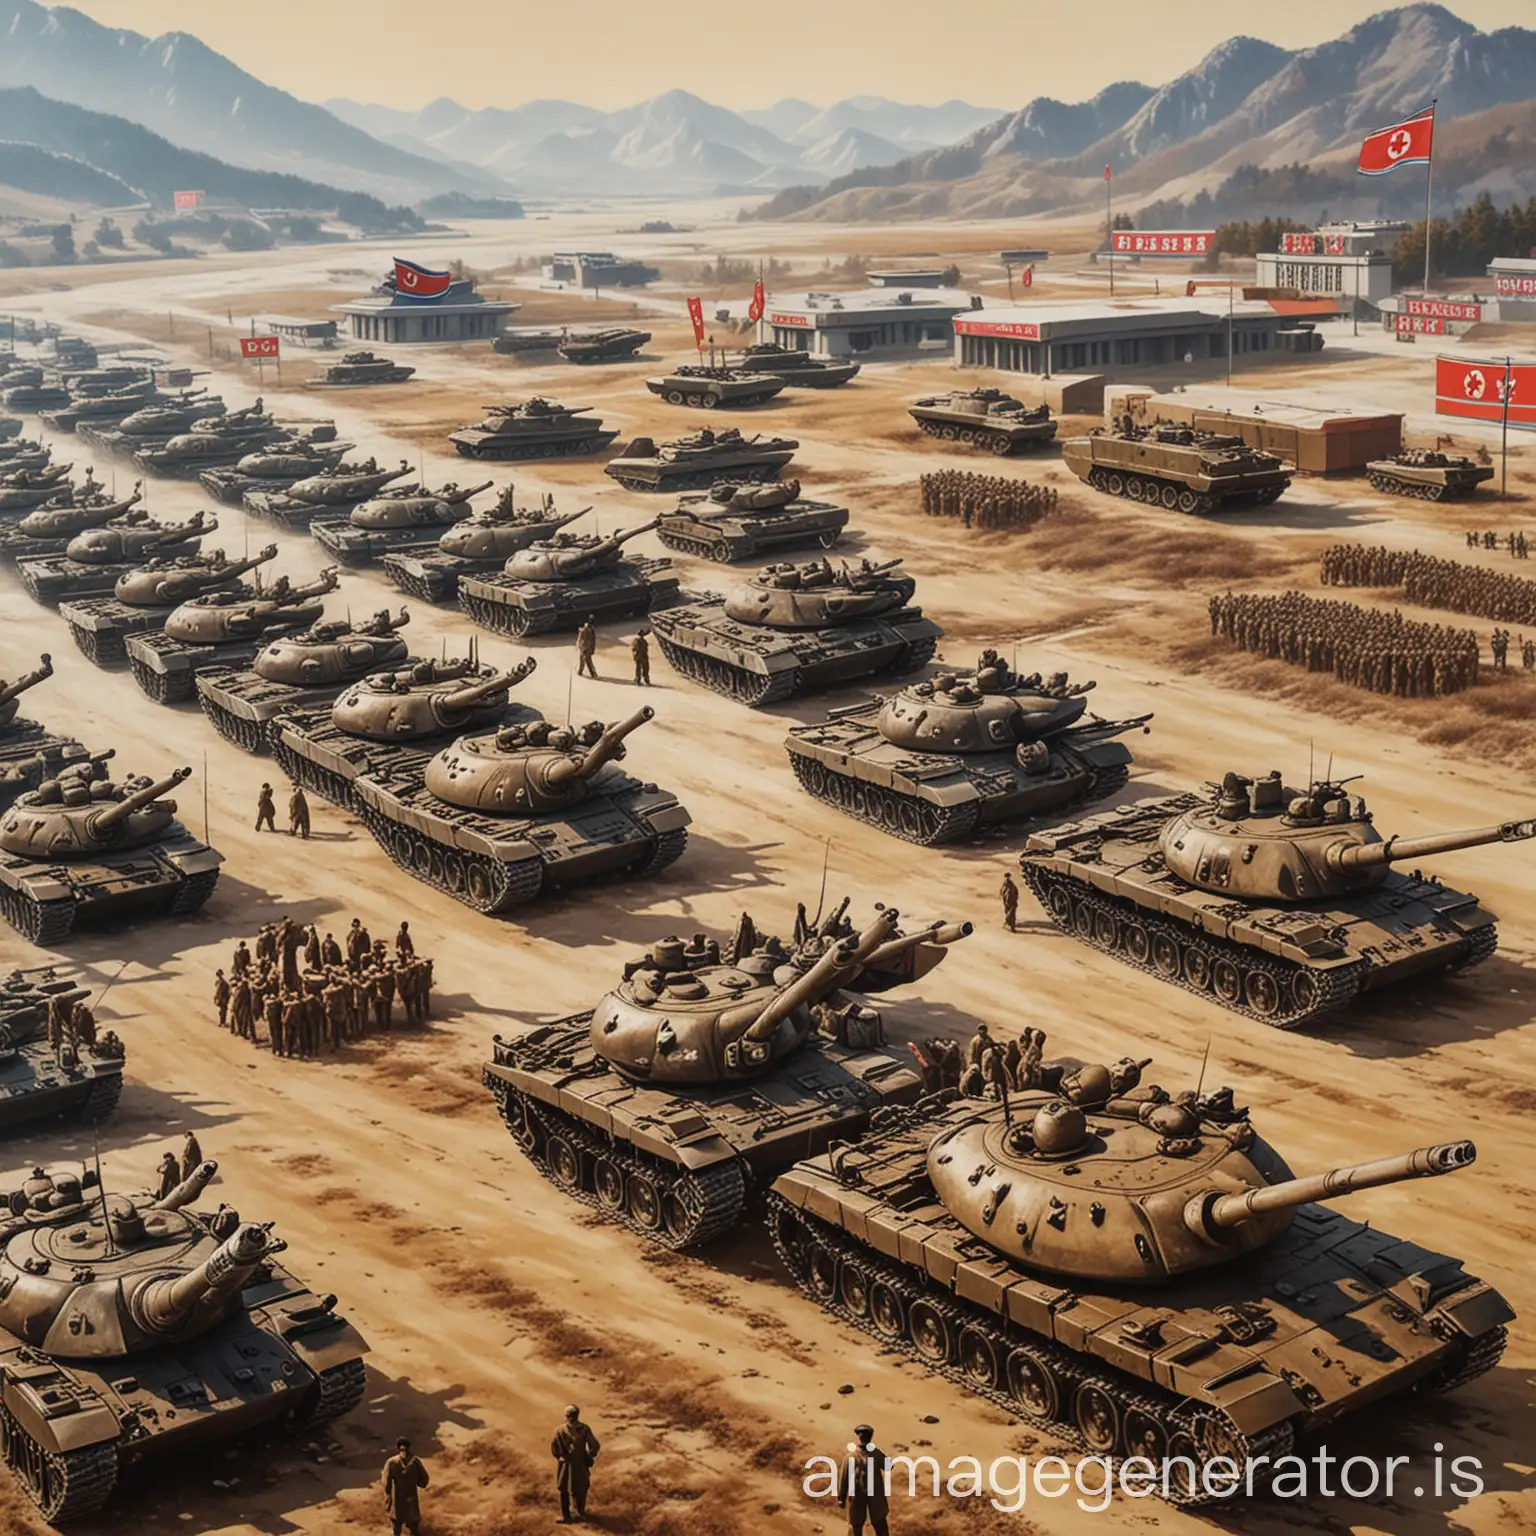 North-Korea-Propaganda-Poster-Featuring-Numerous-Tanks